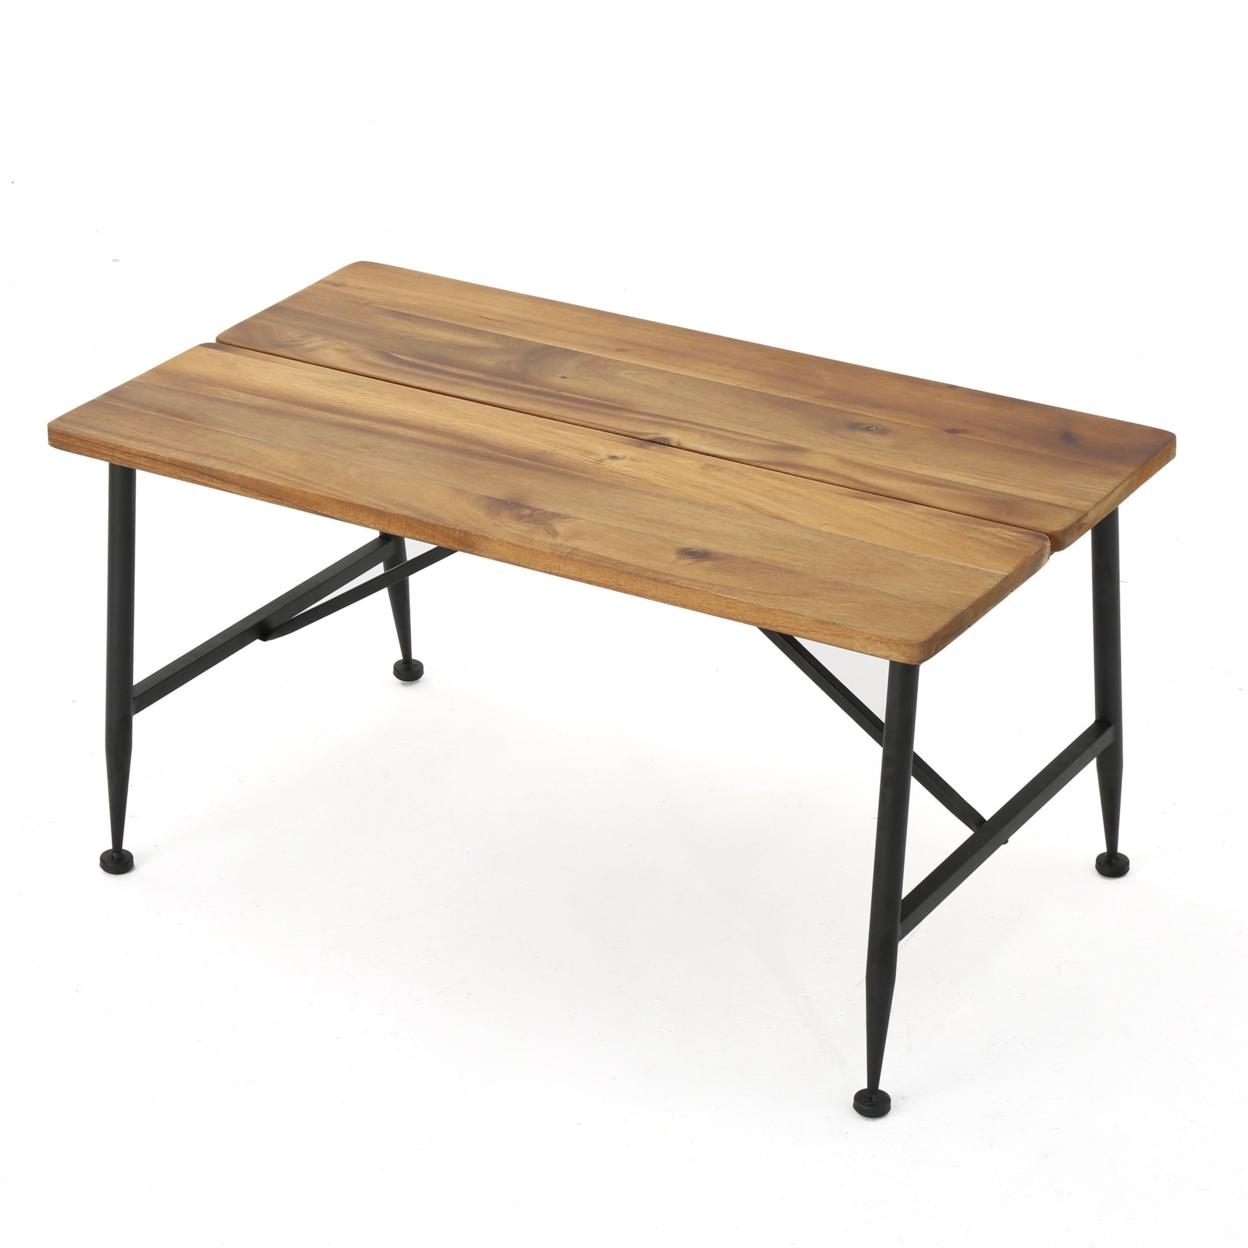 Ellaria Rustic Industrial Acacia Wood Coffee Table With Metal Frame